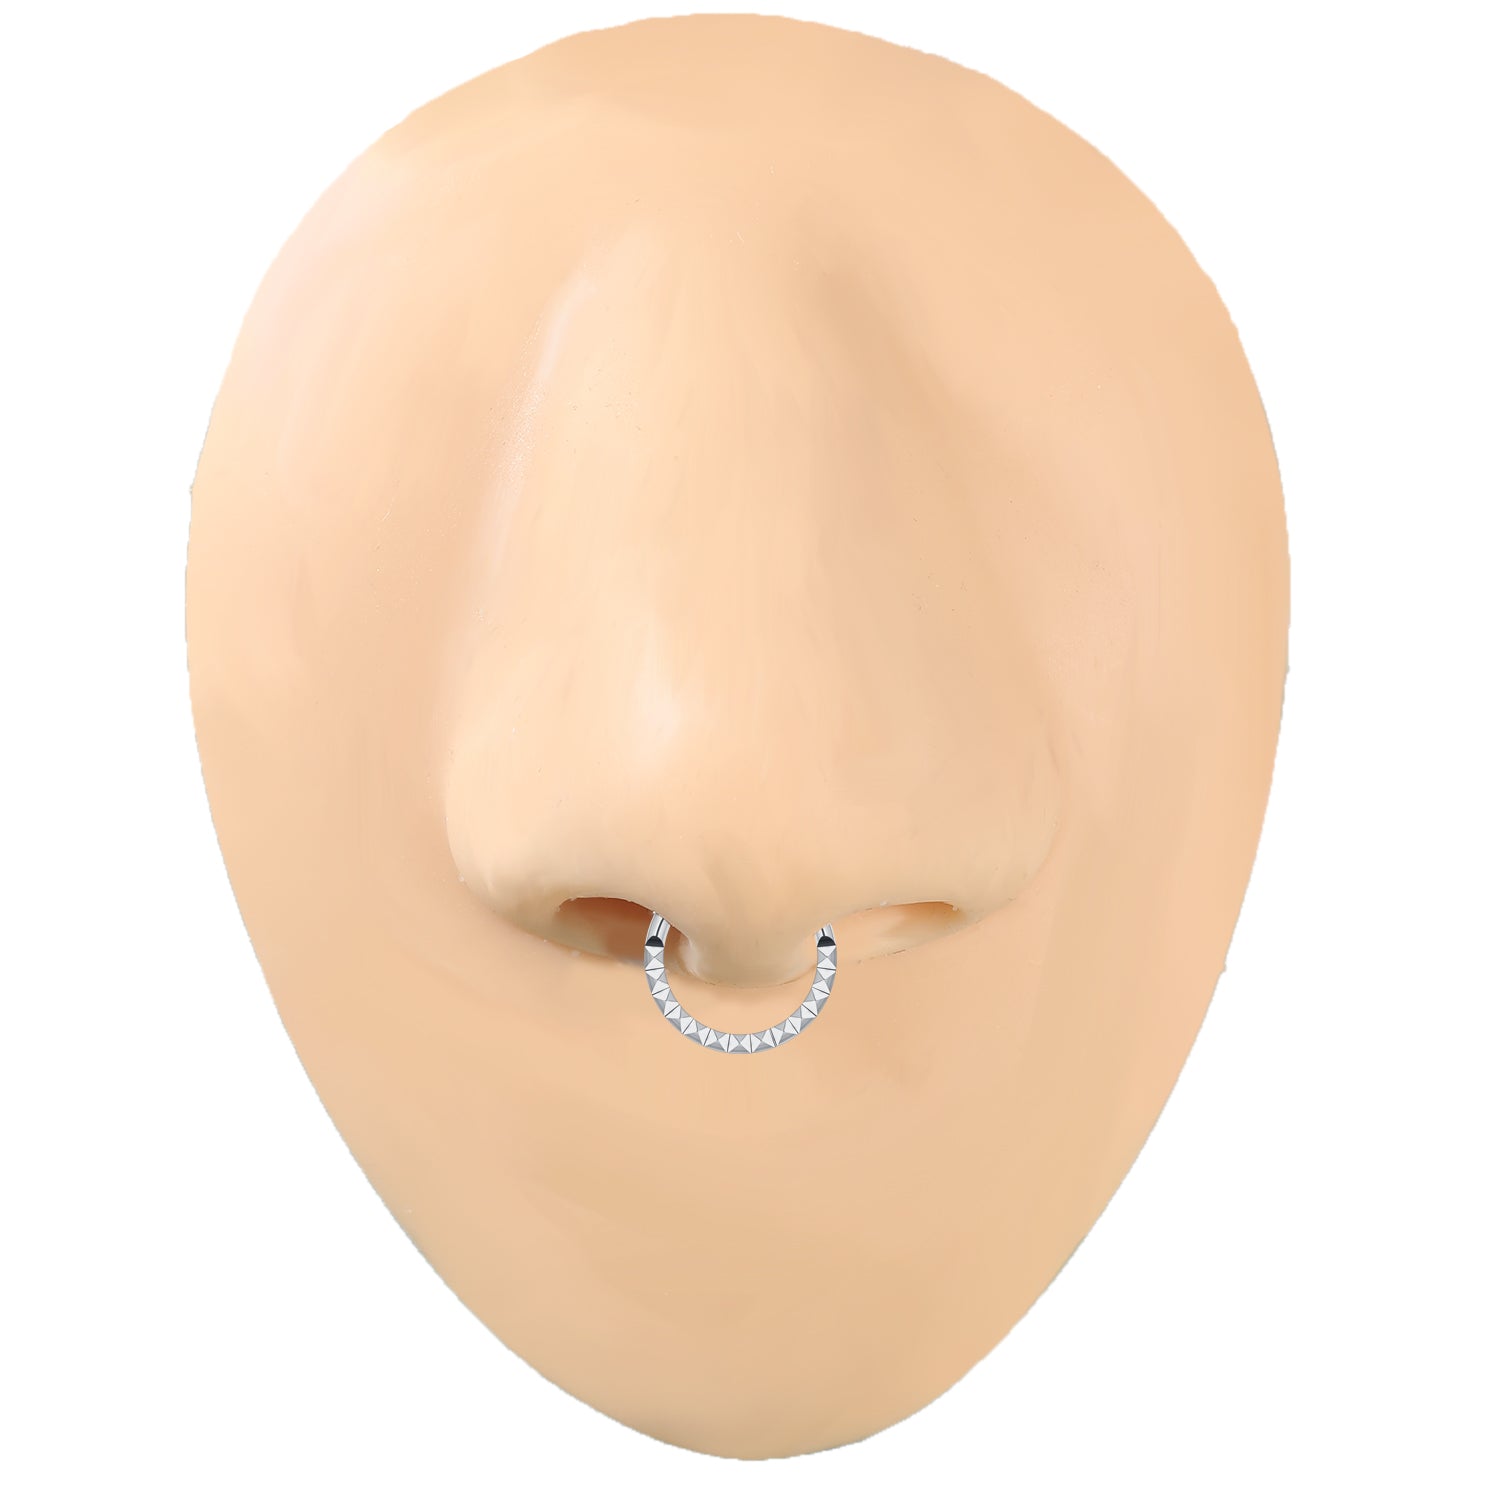 16G G23 Titanium Nose Septum Clicker Silver Gold Color Conch Helix Cartilage Piercing